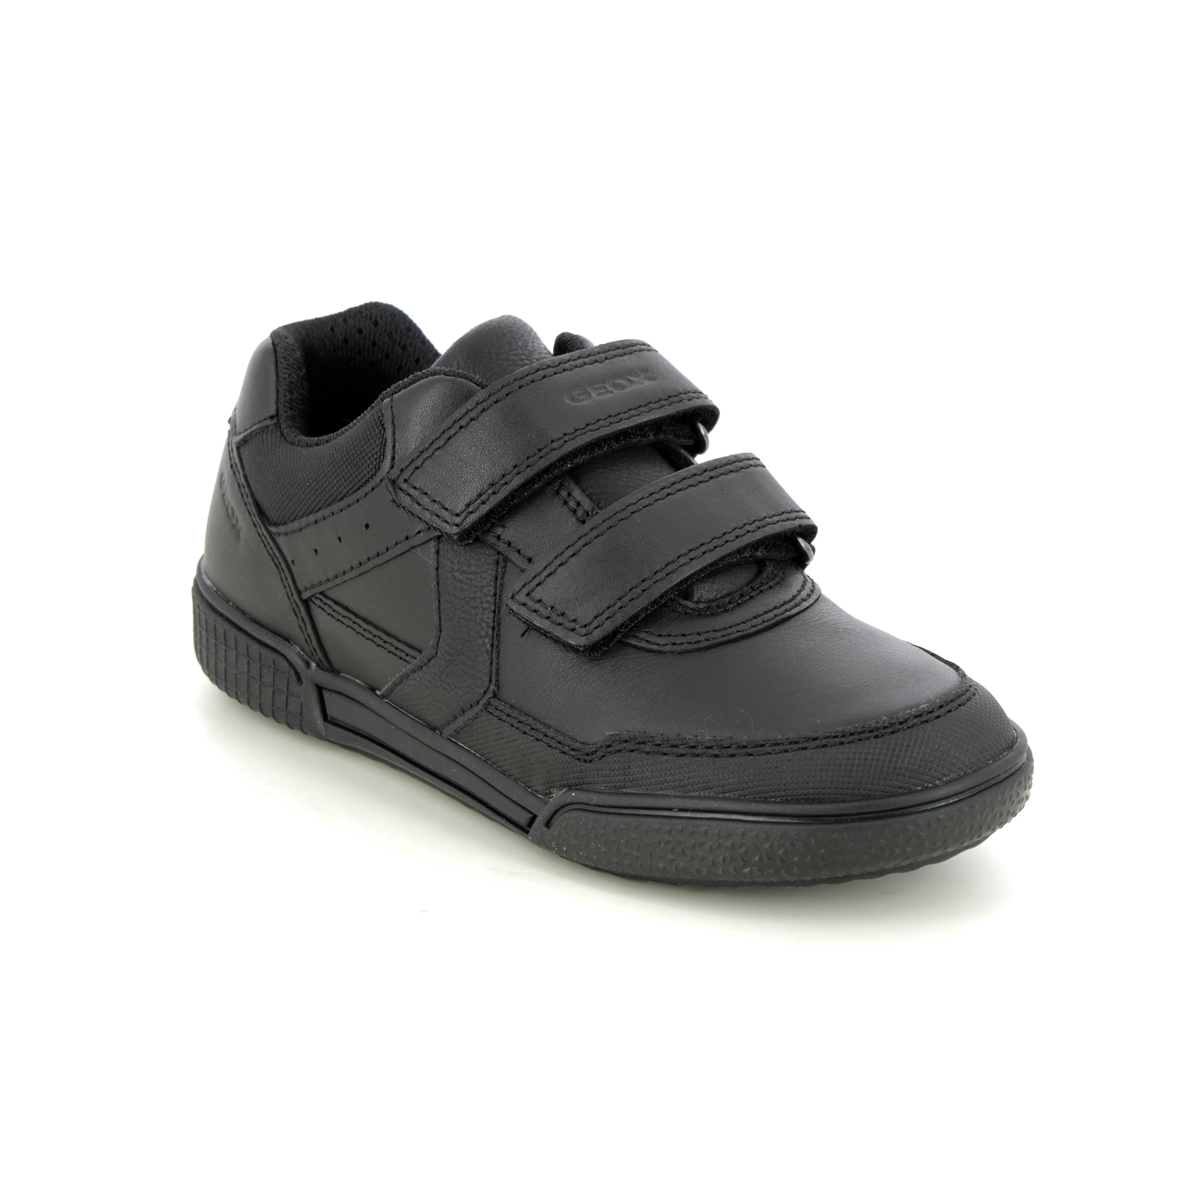 Geox - Poseido Boy 2V (Black Leather) J02Bca-C9999 In Size 28 In Plain Black Leather For School For kids